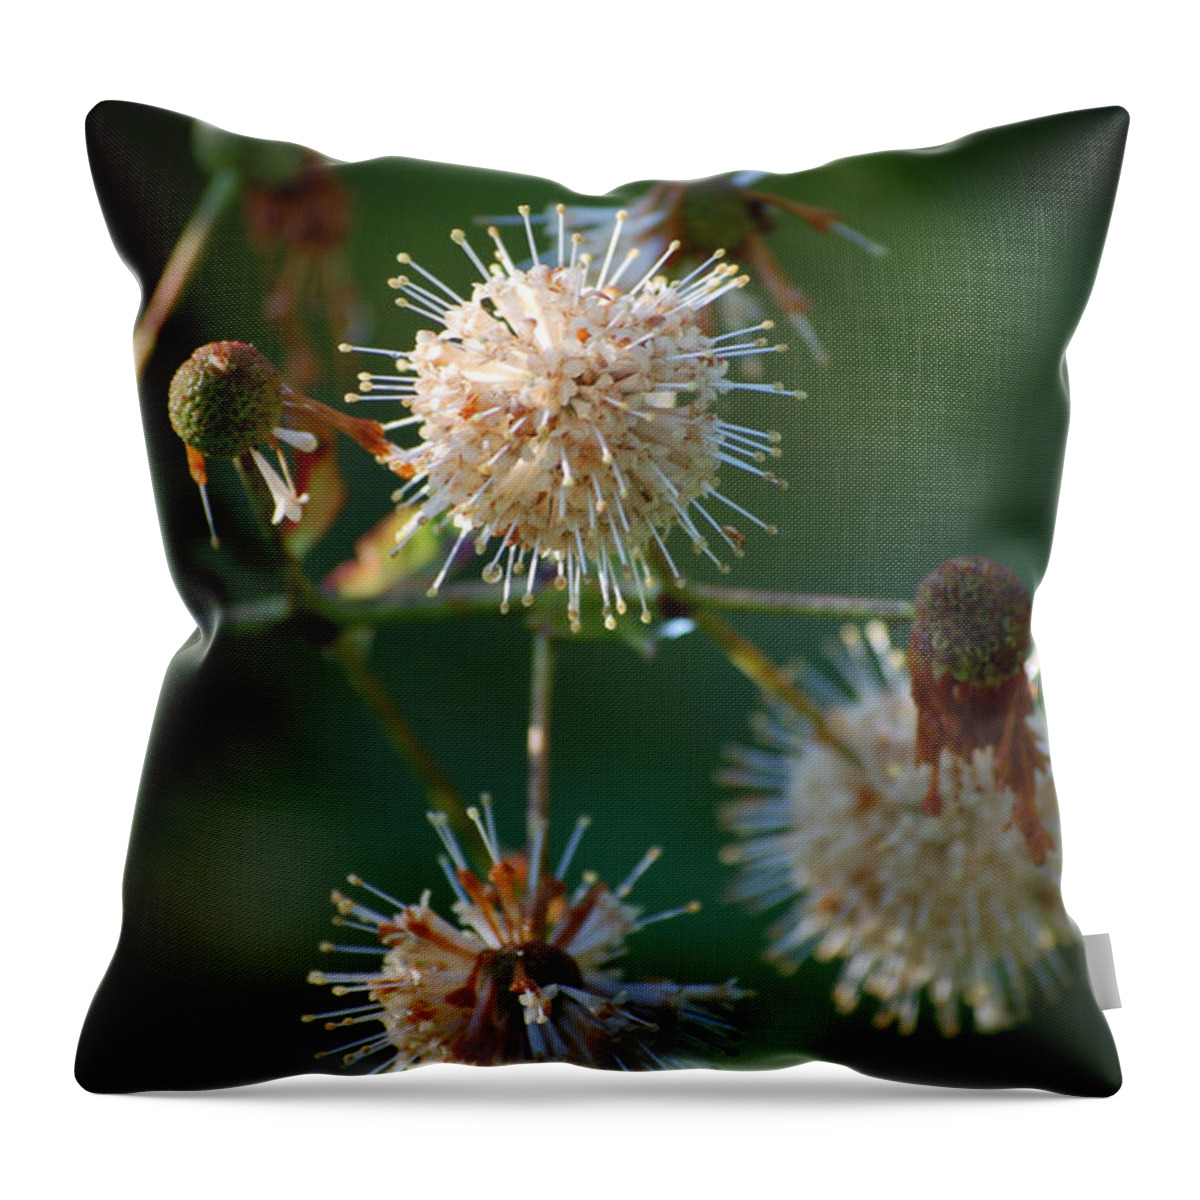 Buttonbush Throw Pillow featuring the photograph Fallen Flowers by Robert Meanor